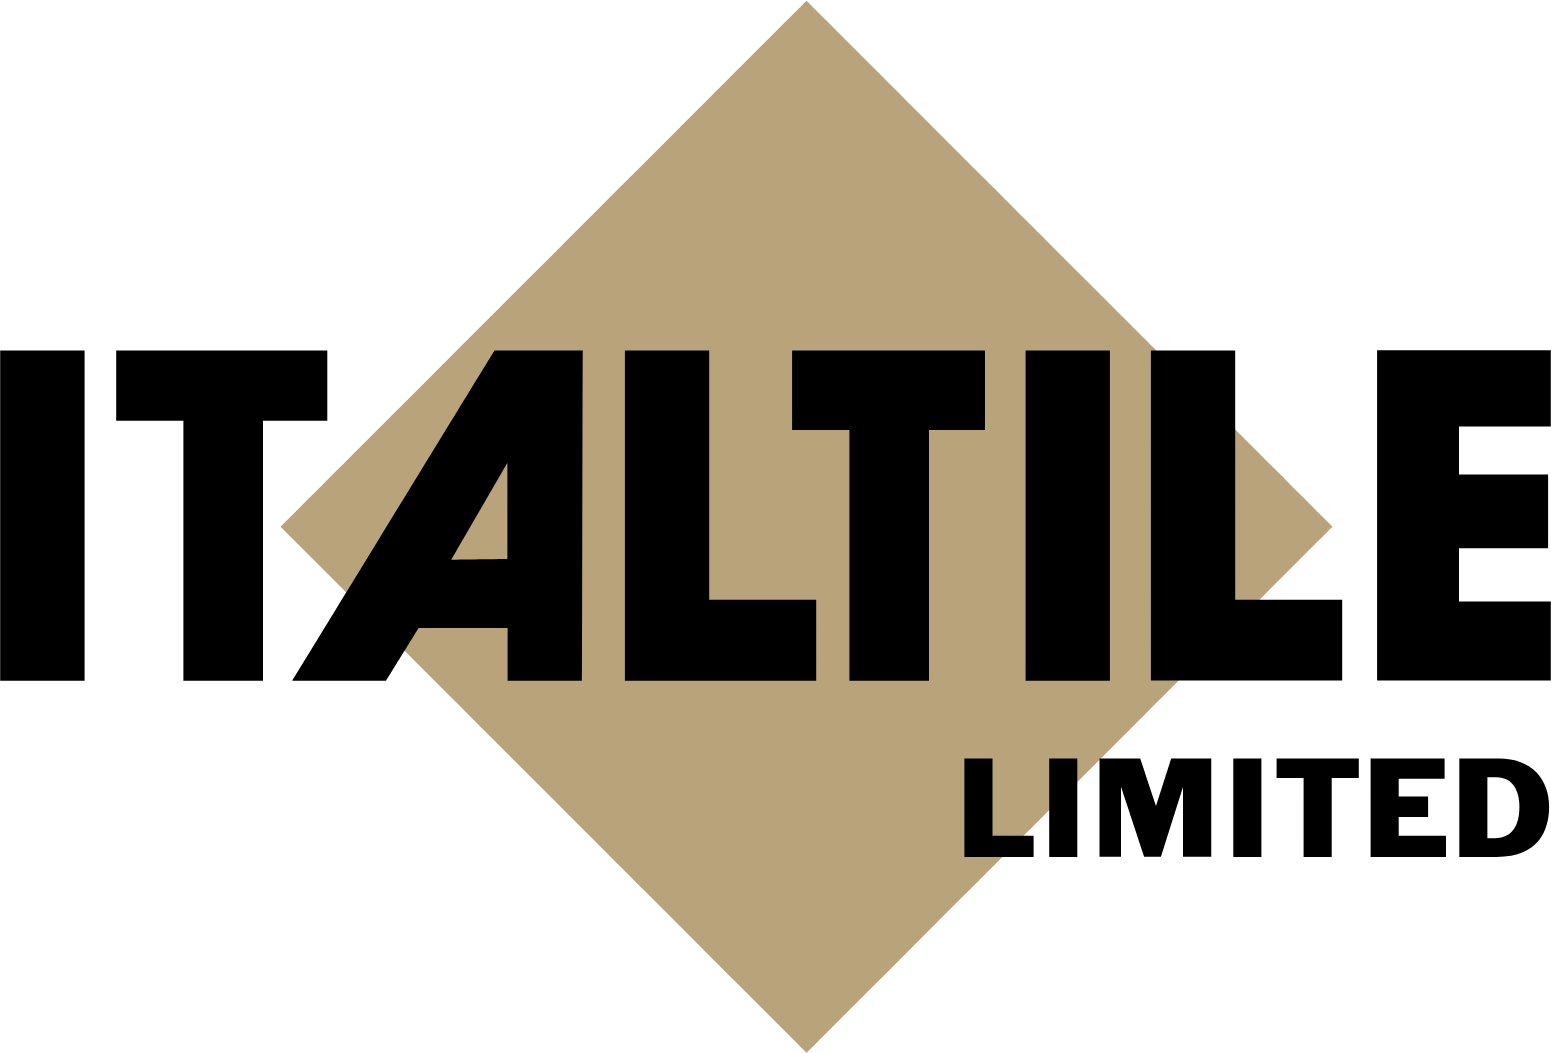 Italtile logo large (transparent PNG)